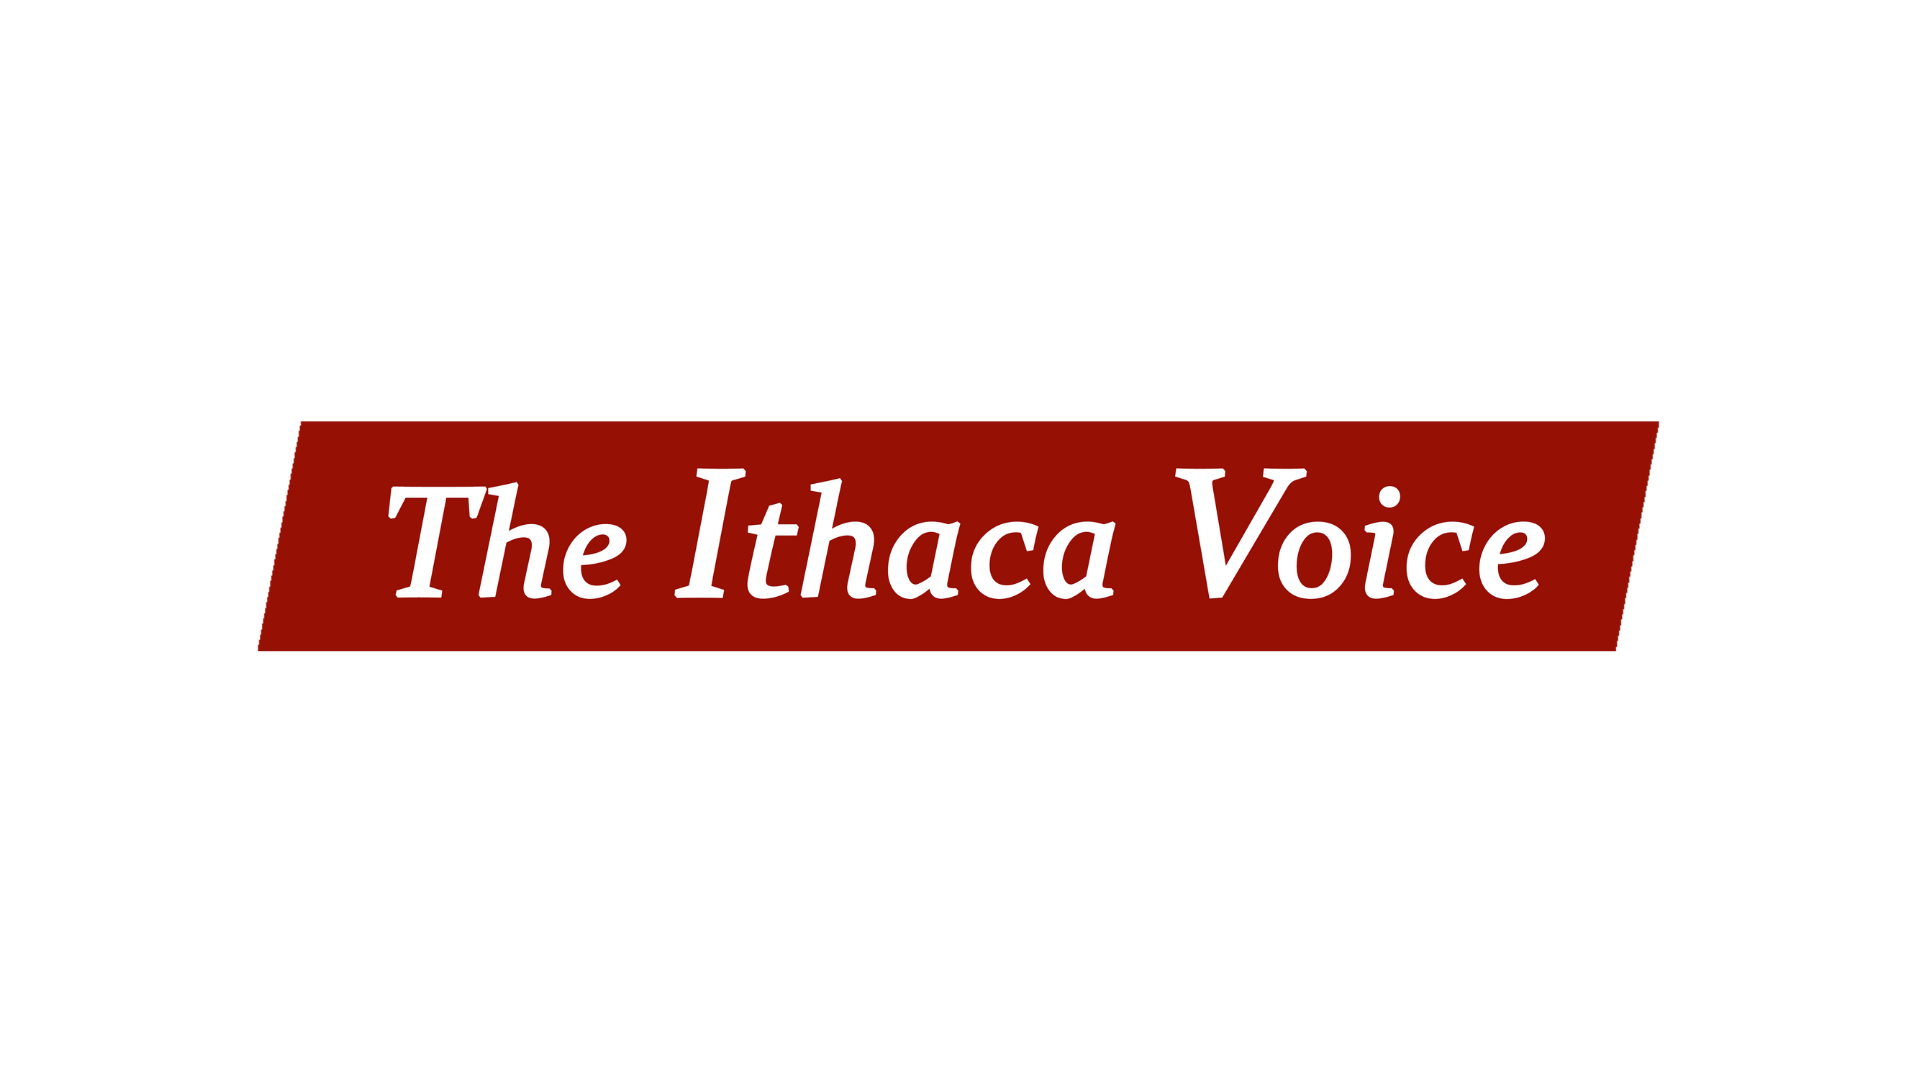 The Ithaca Voice